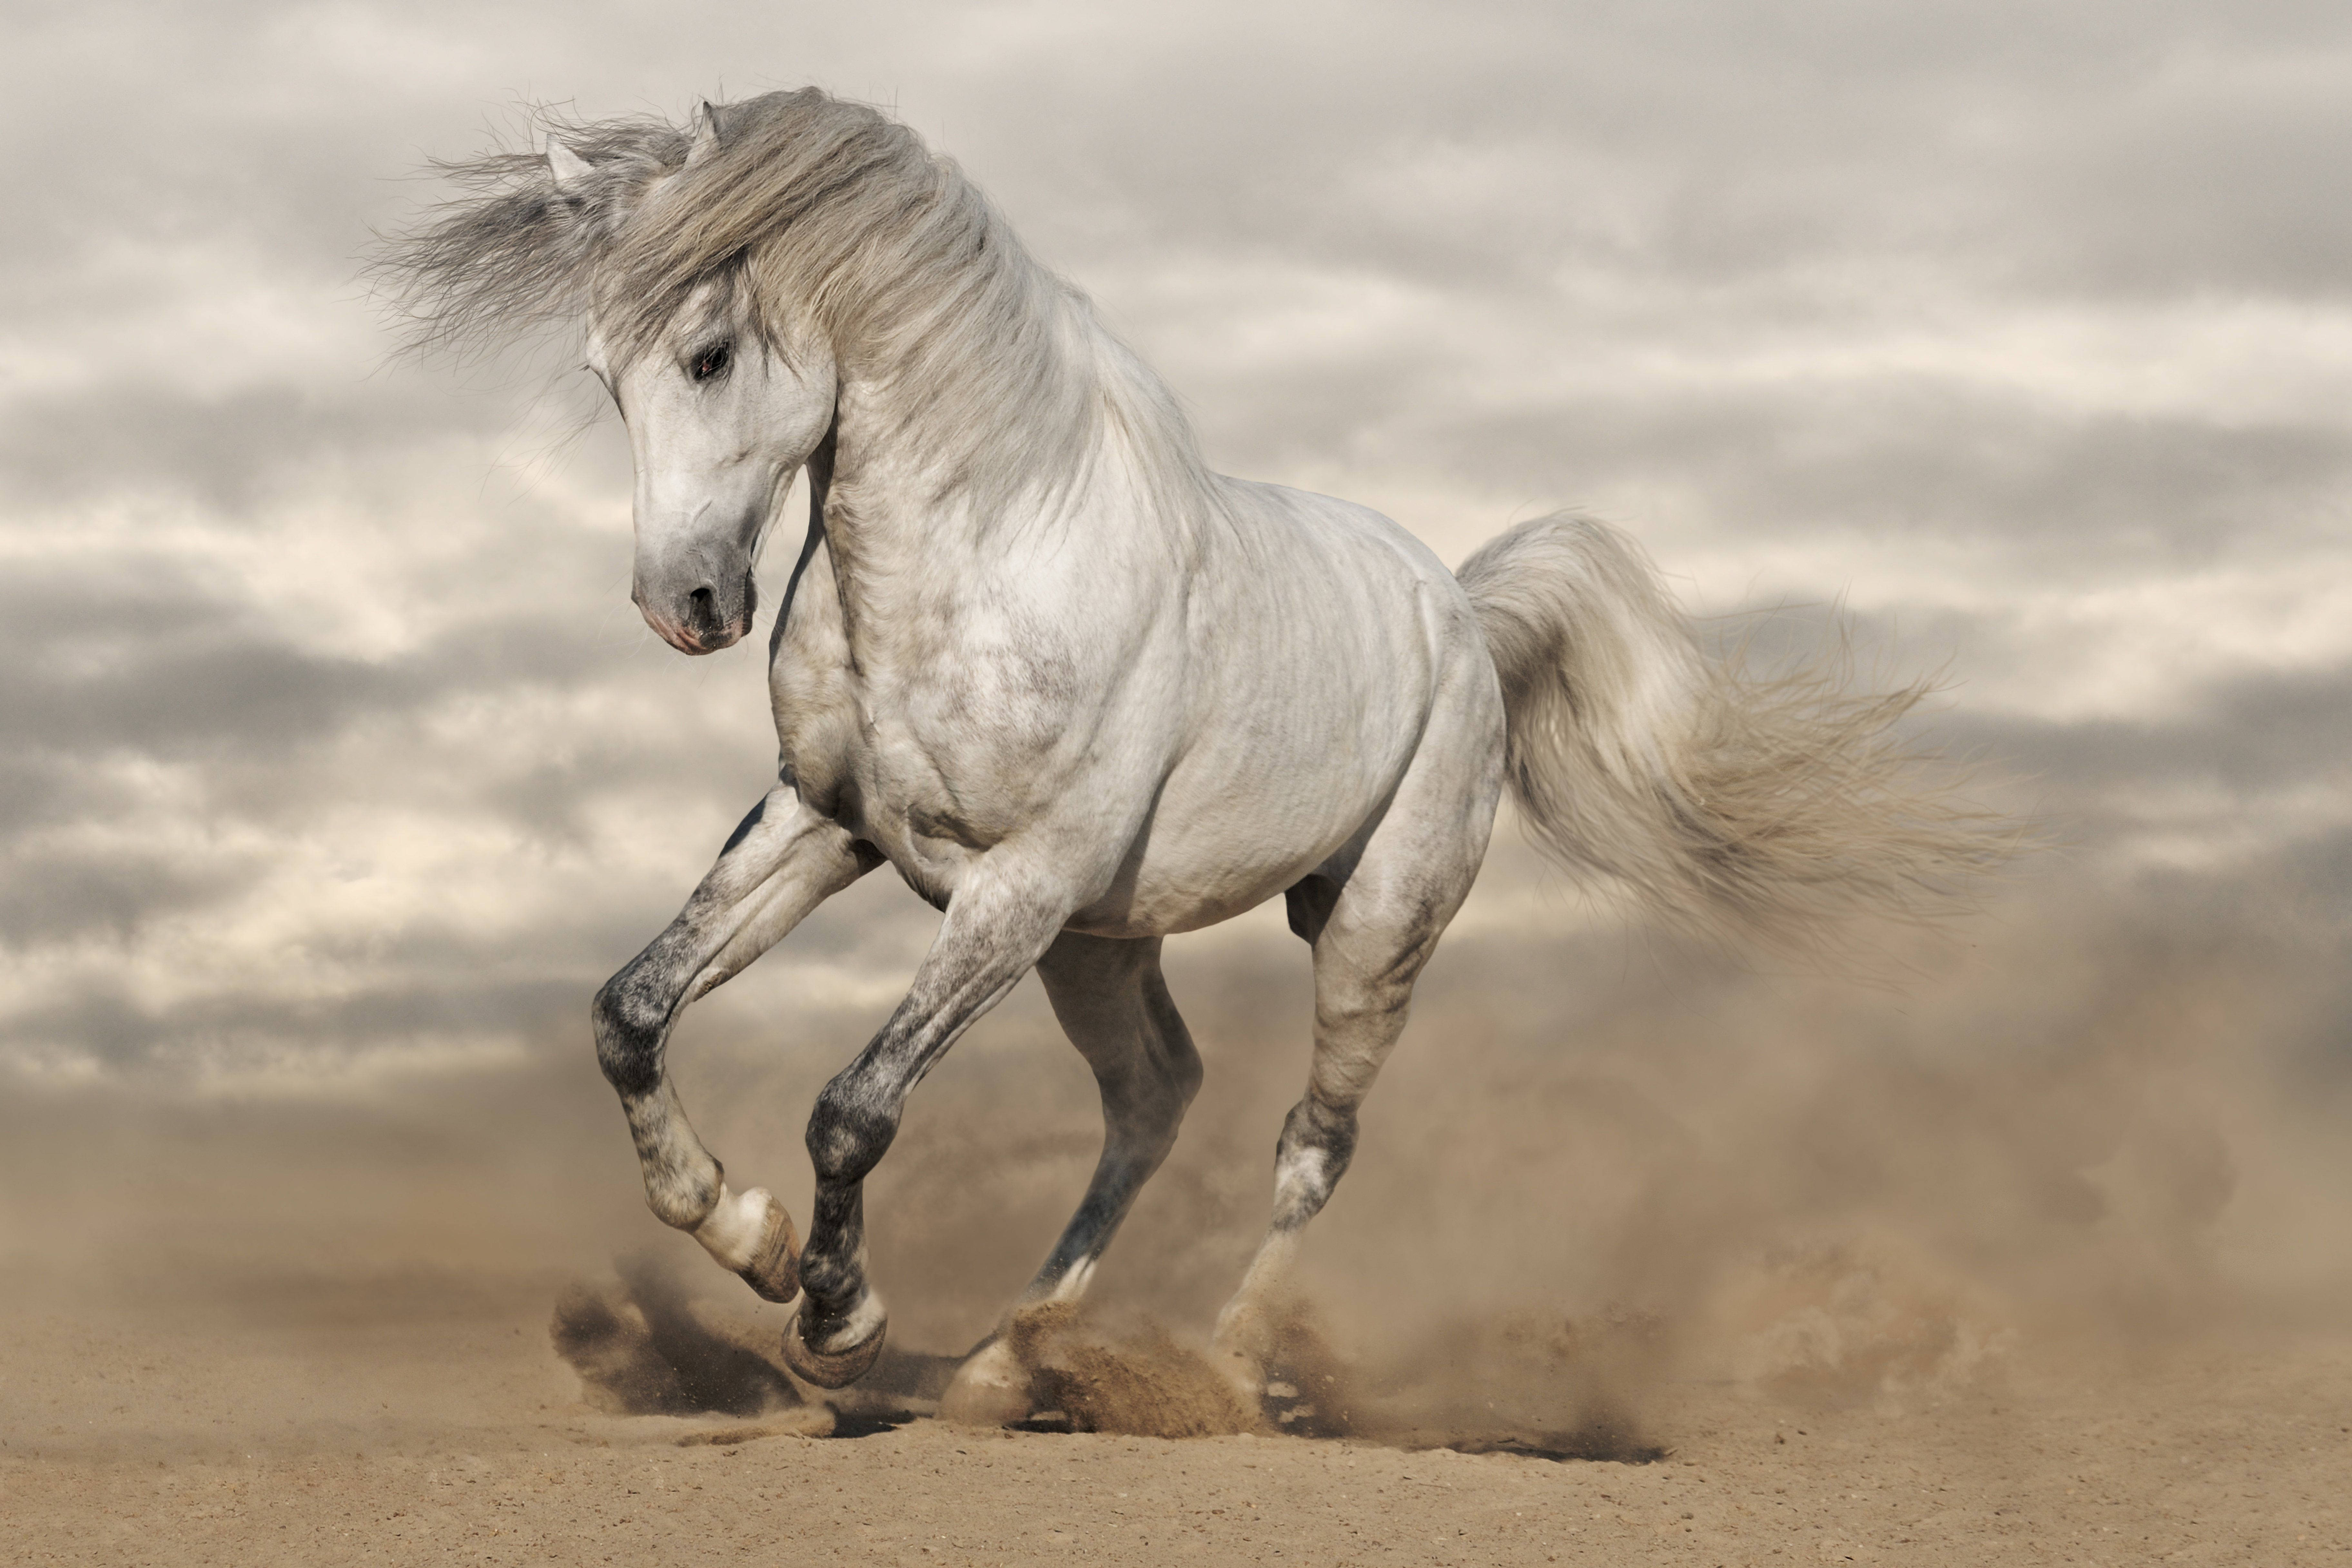 Cantering White Horse In Desert Background